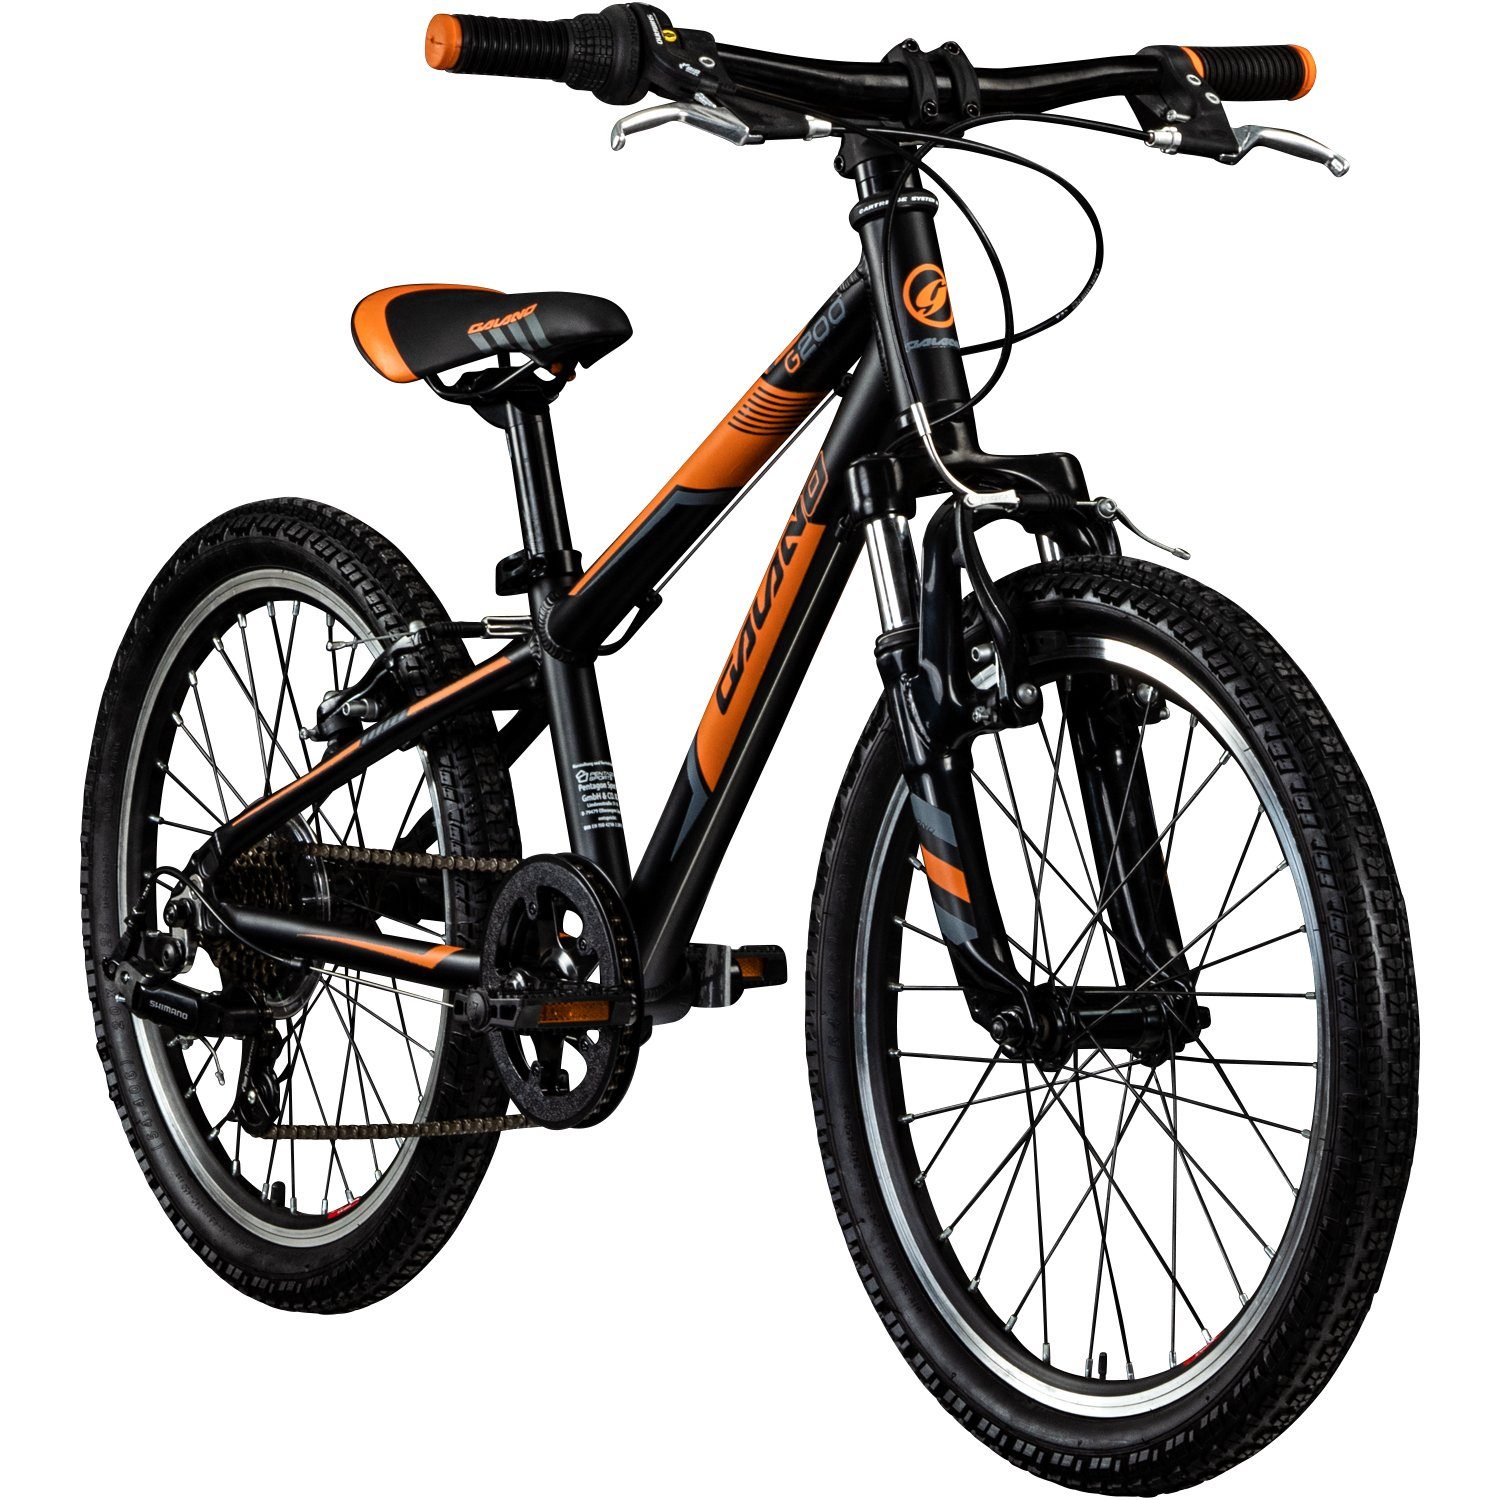 Galano Mountainbike G200 20, 7 Gang, Kettenschaltung, Kinderfahrrad  Mädchen Jungen 120 - 135 cm Fahrrad 20 Zoll ab 6 Jahre